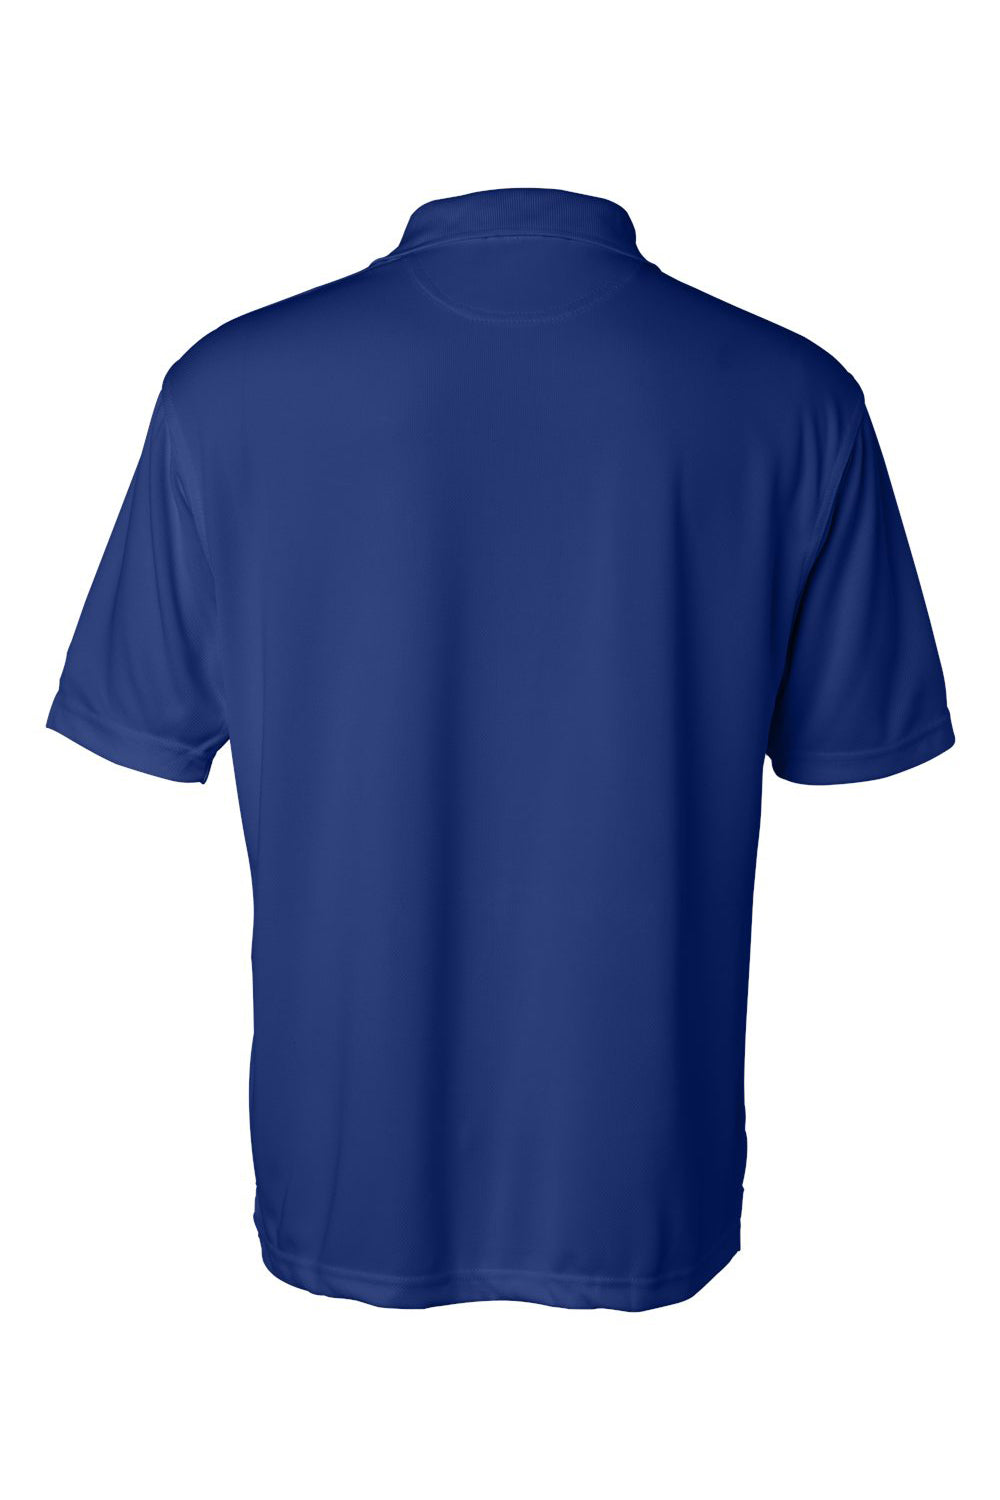 Sierra Pacific 0469 Mens Moisture Wish Mesh Short Sleeve Polo Shirt Royal Blue Flat Back